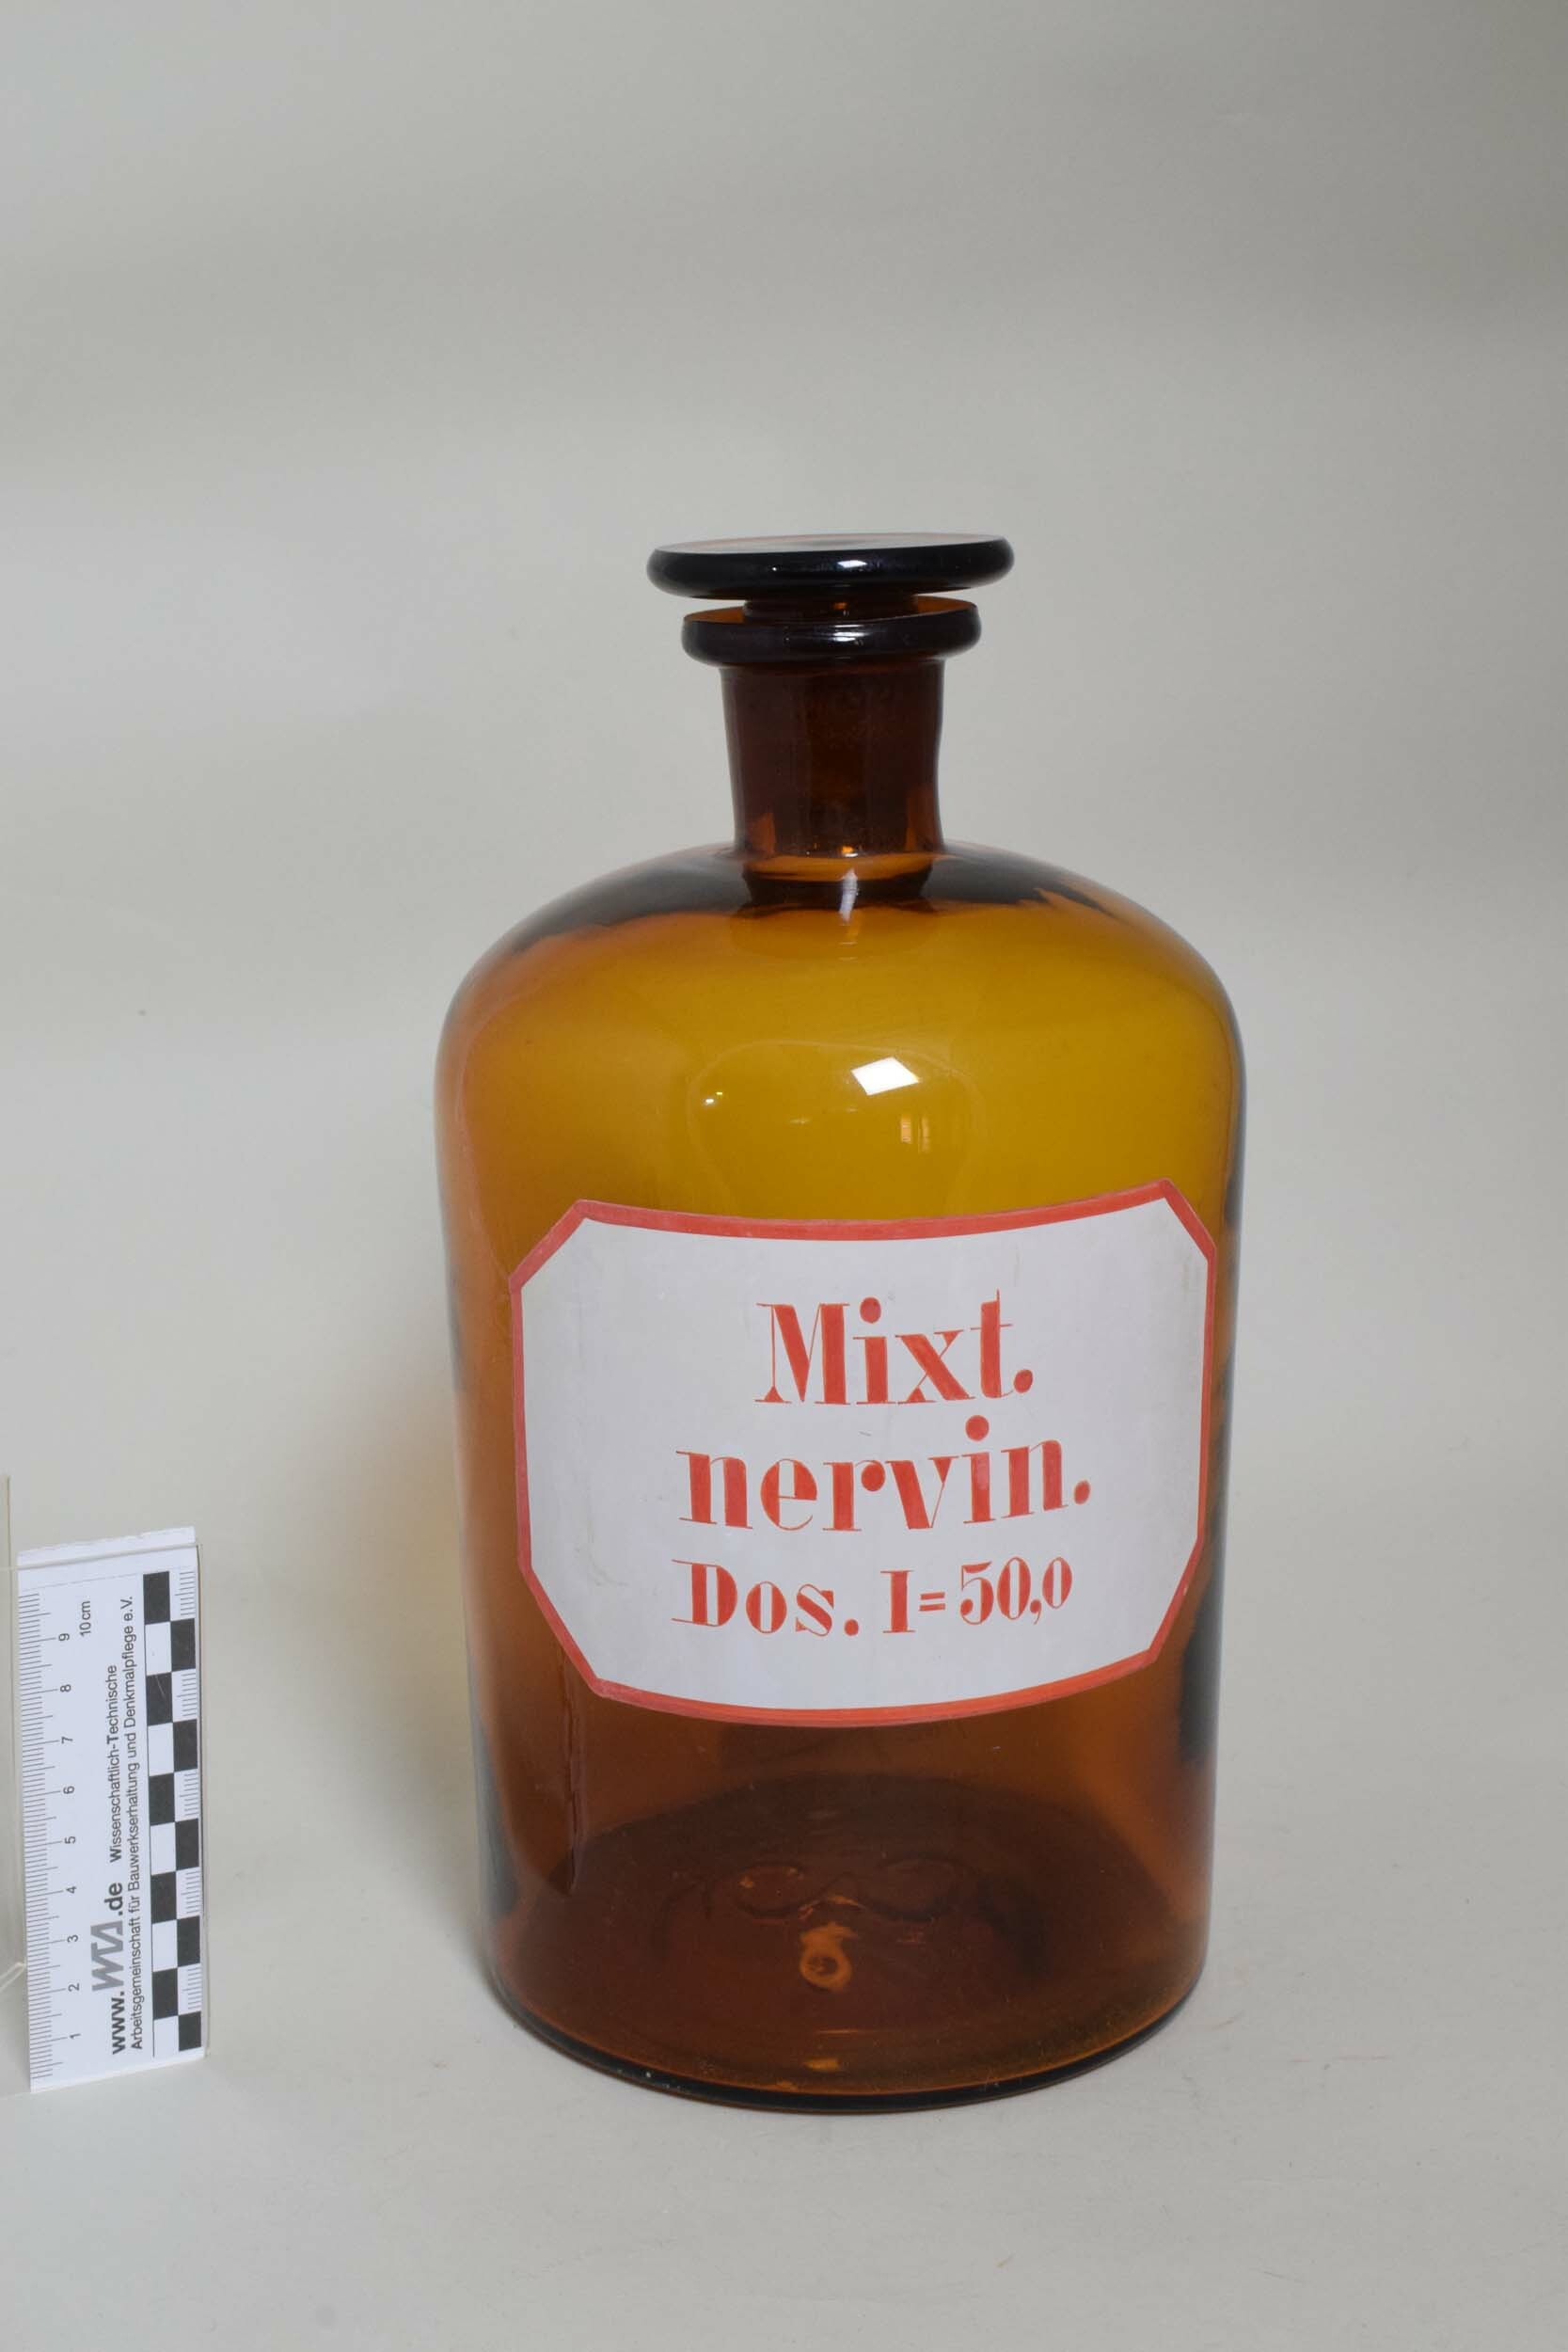 Apothekenflasche "Mixt. nervin. / Dos. 1=50,0" (Heimatmuseum Dohna CC BY-NC-SA)